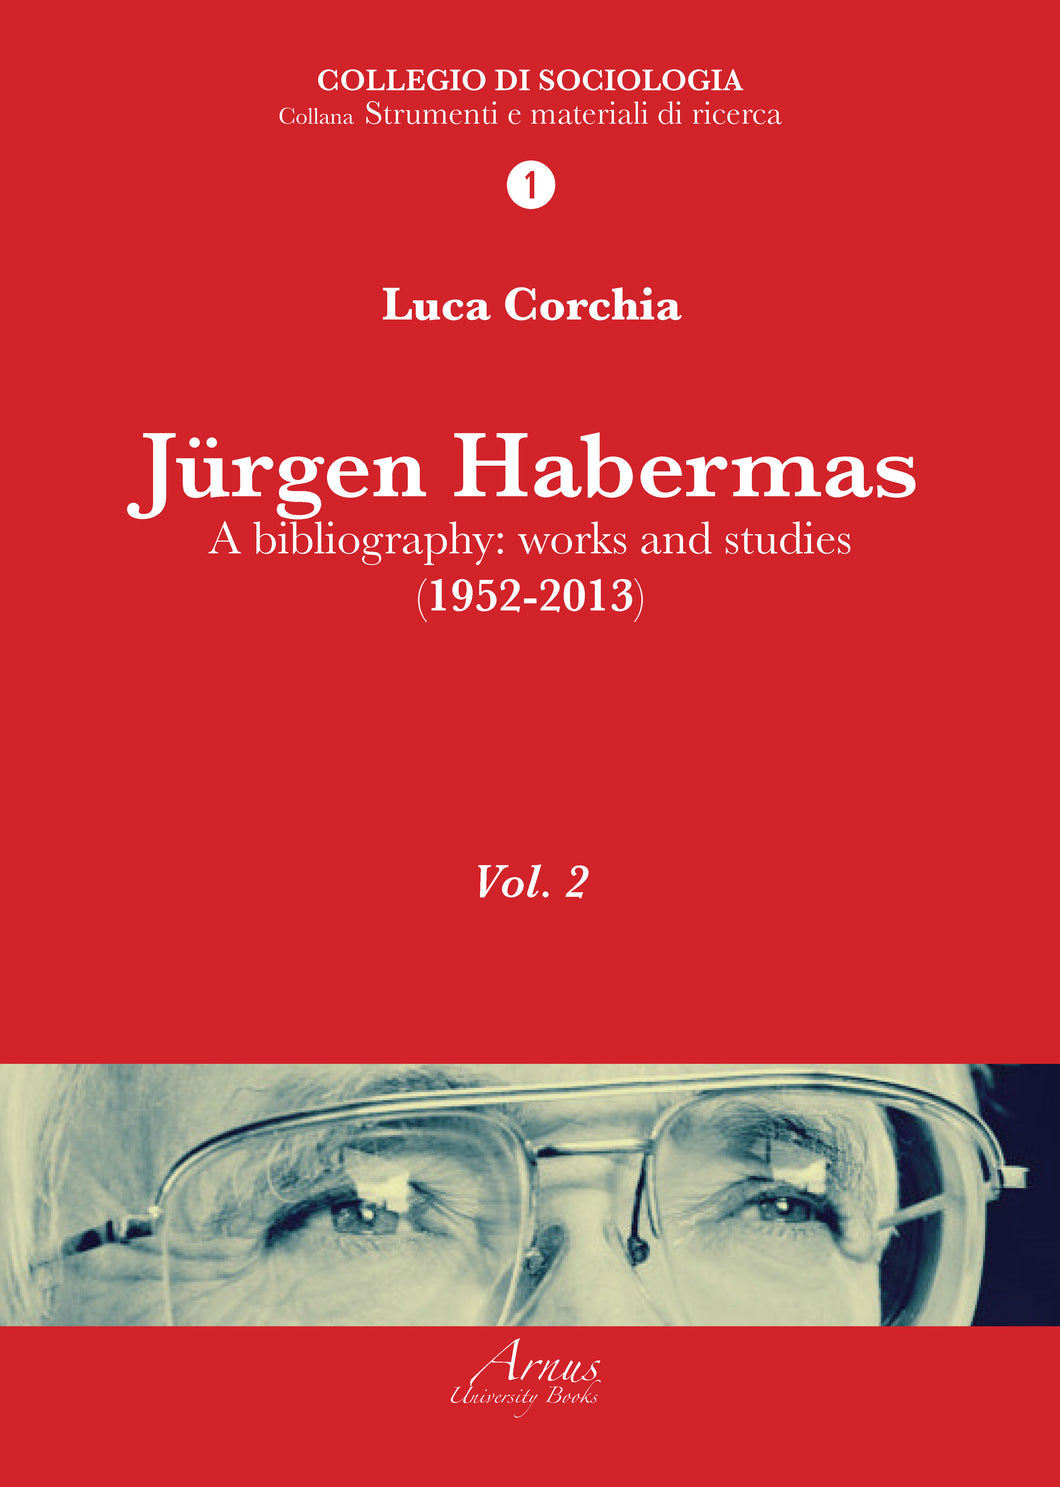 Jurgen Habermas. A bibliography: works and studies (1952-2013) Vol. II